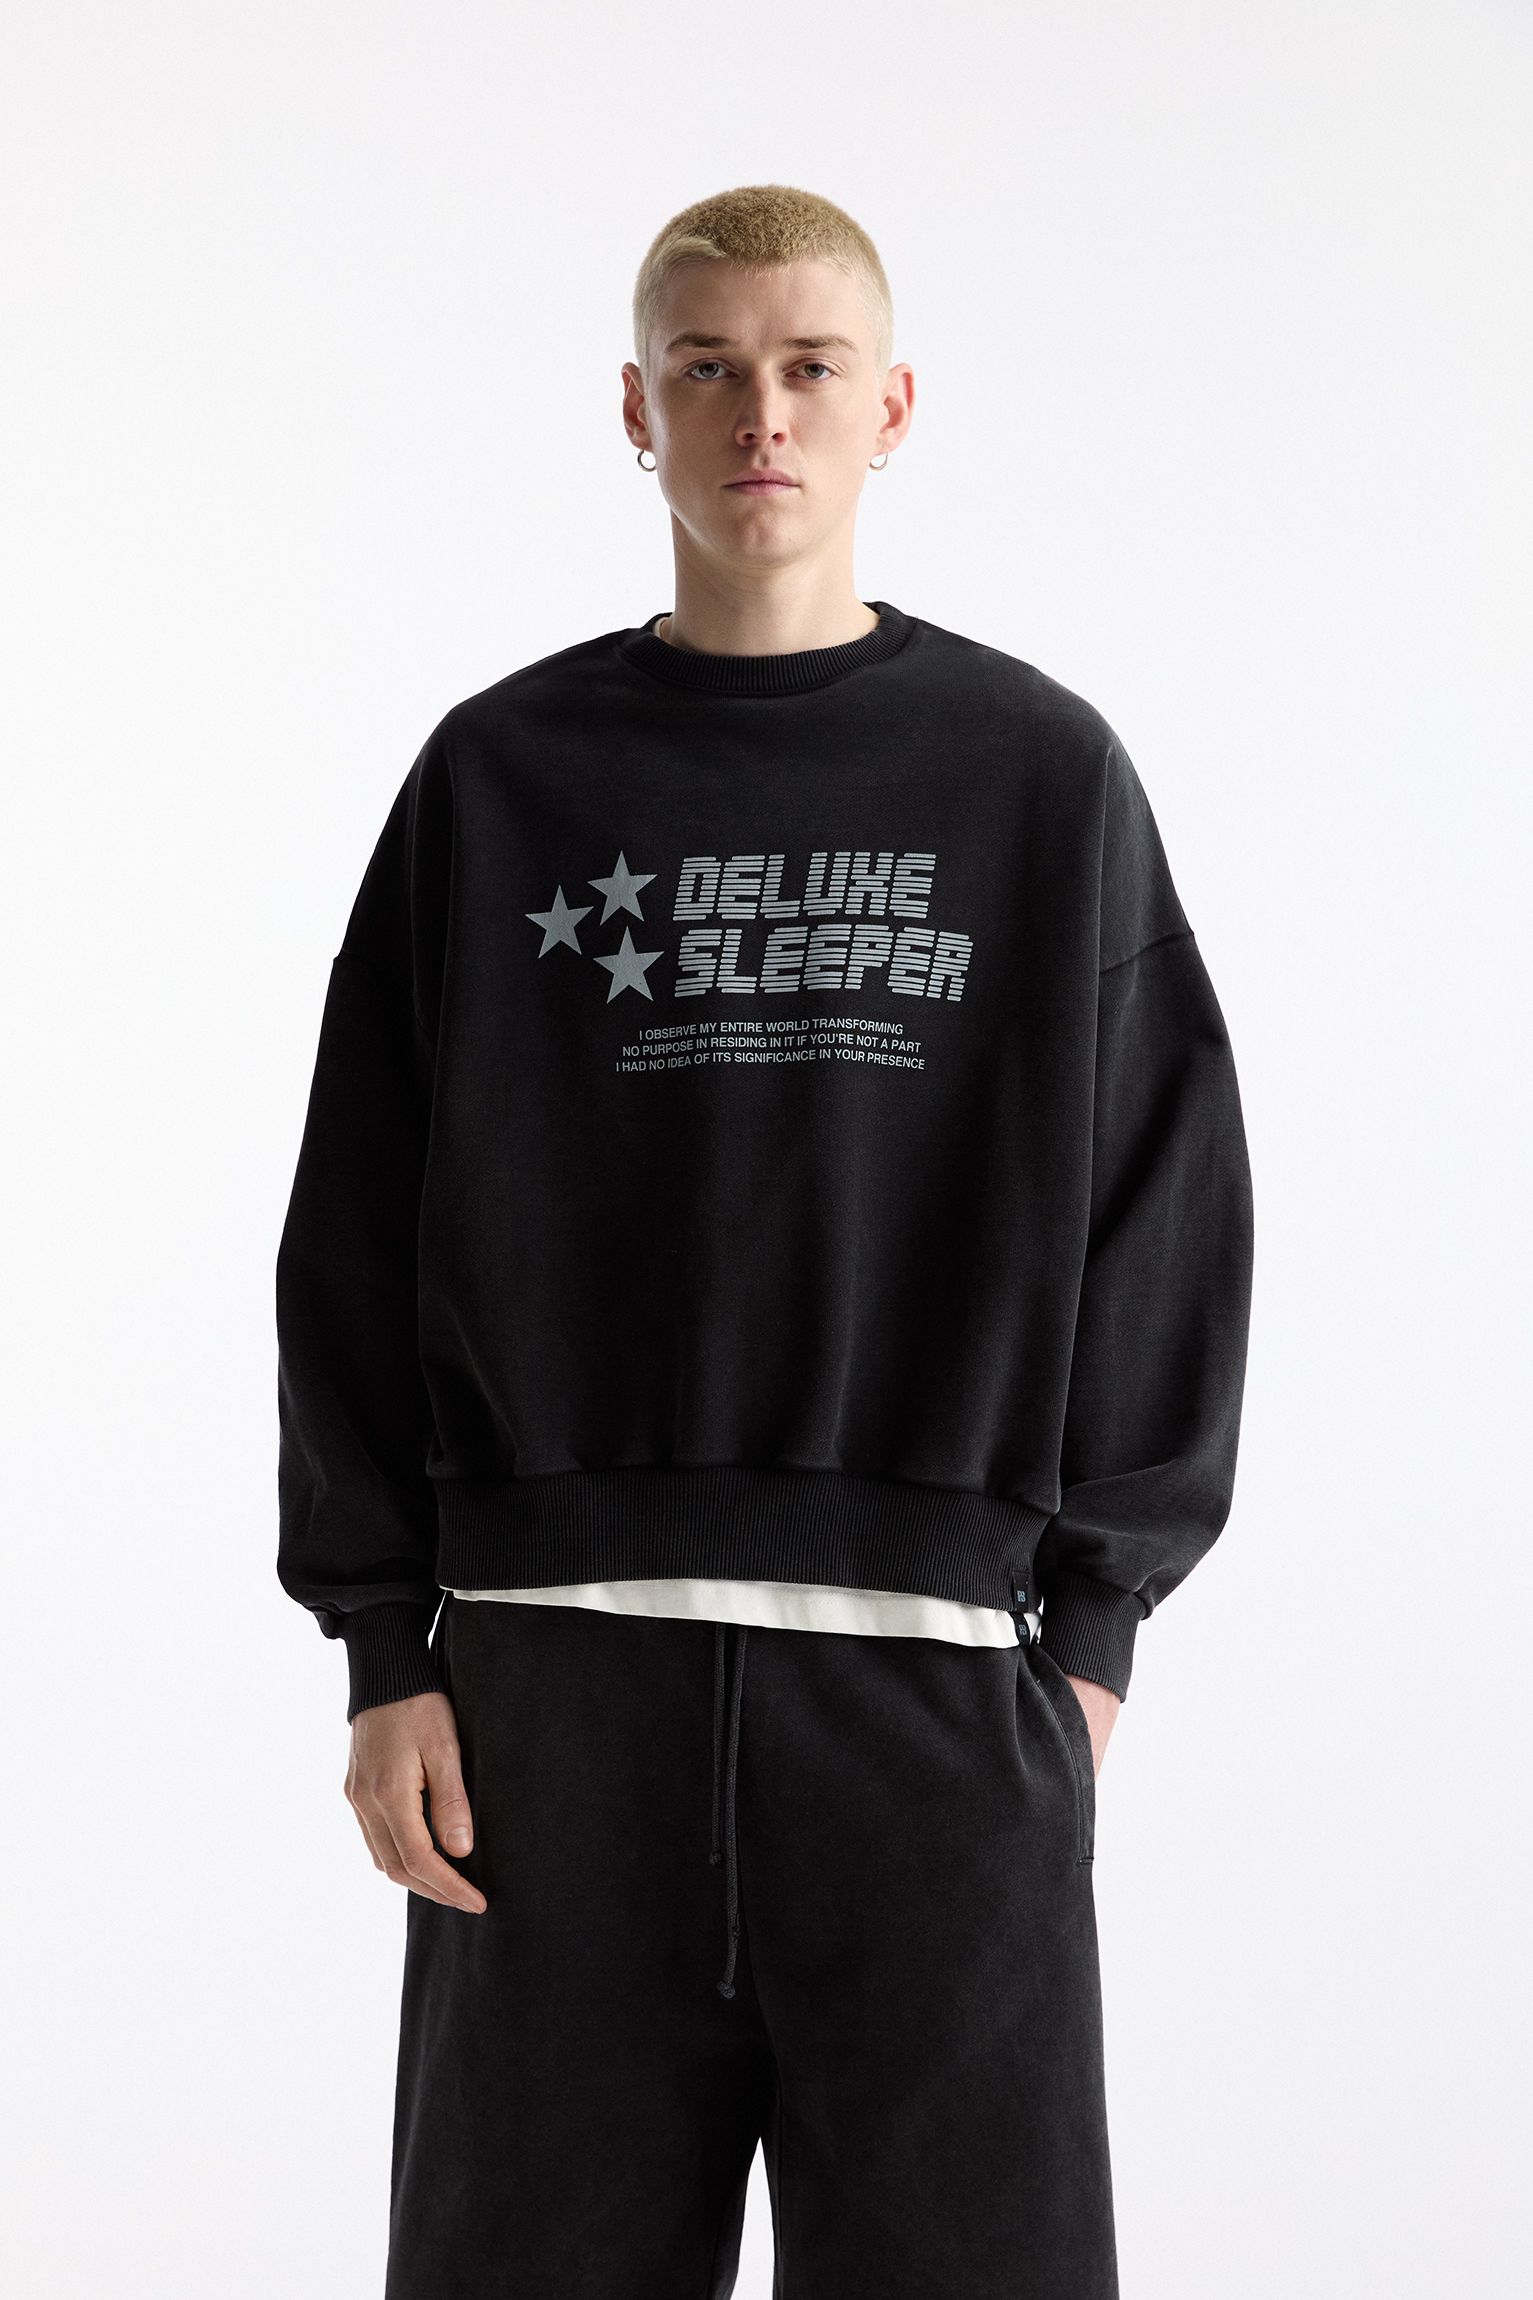 Oversize sweatshirt with star graphic